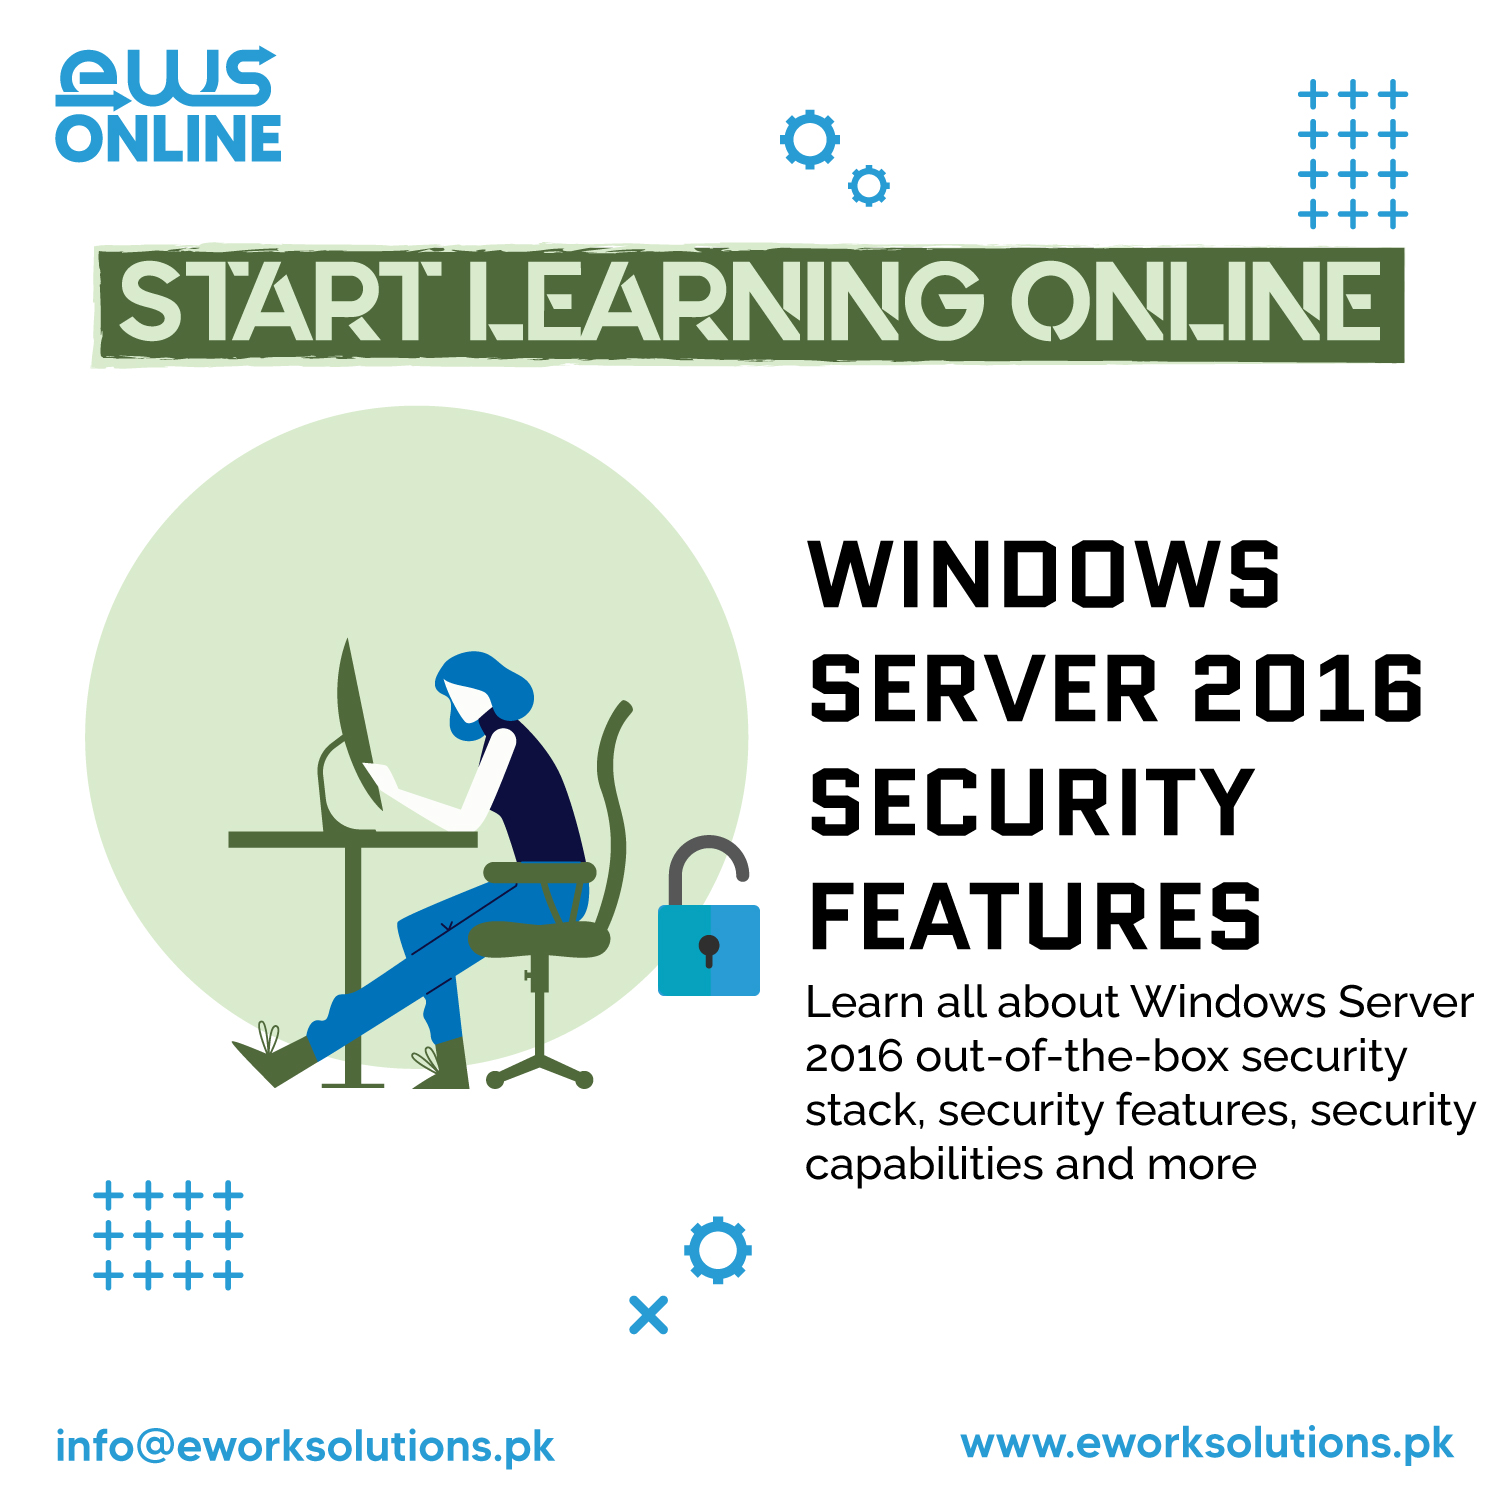 Windows Server 2016 Security Features